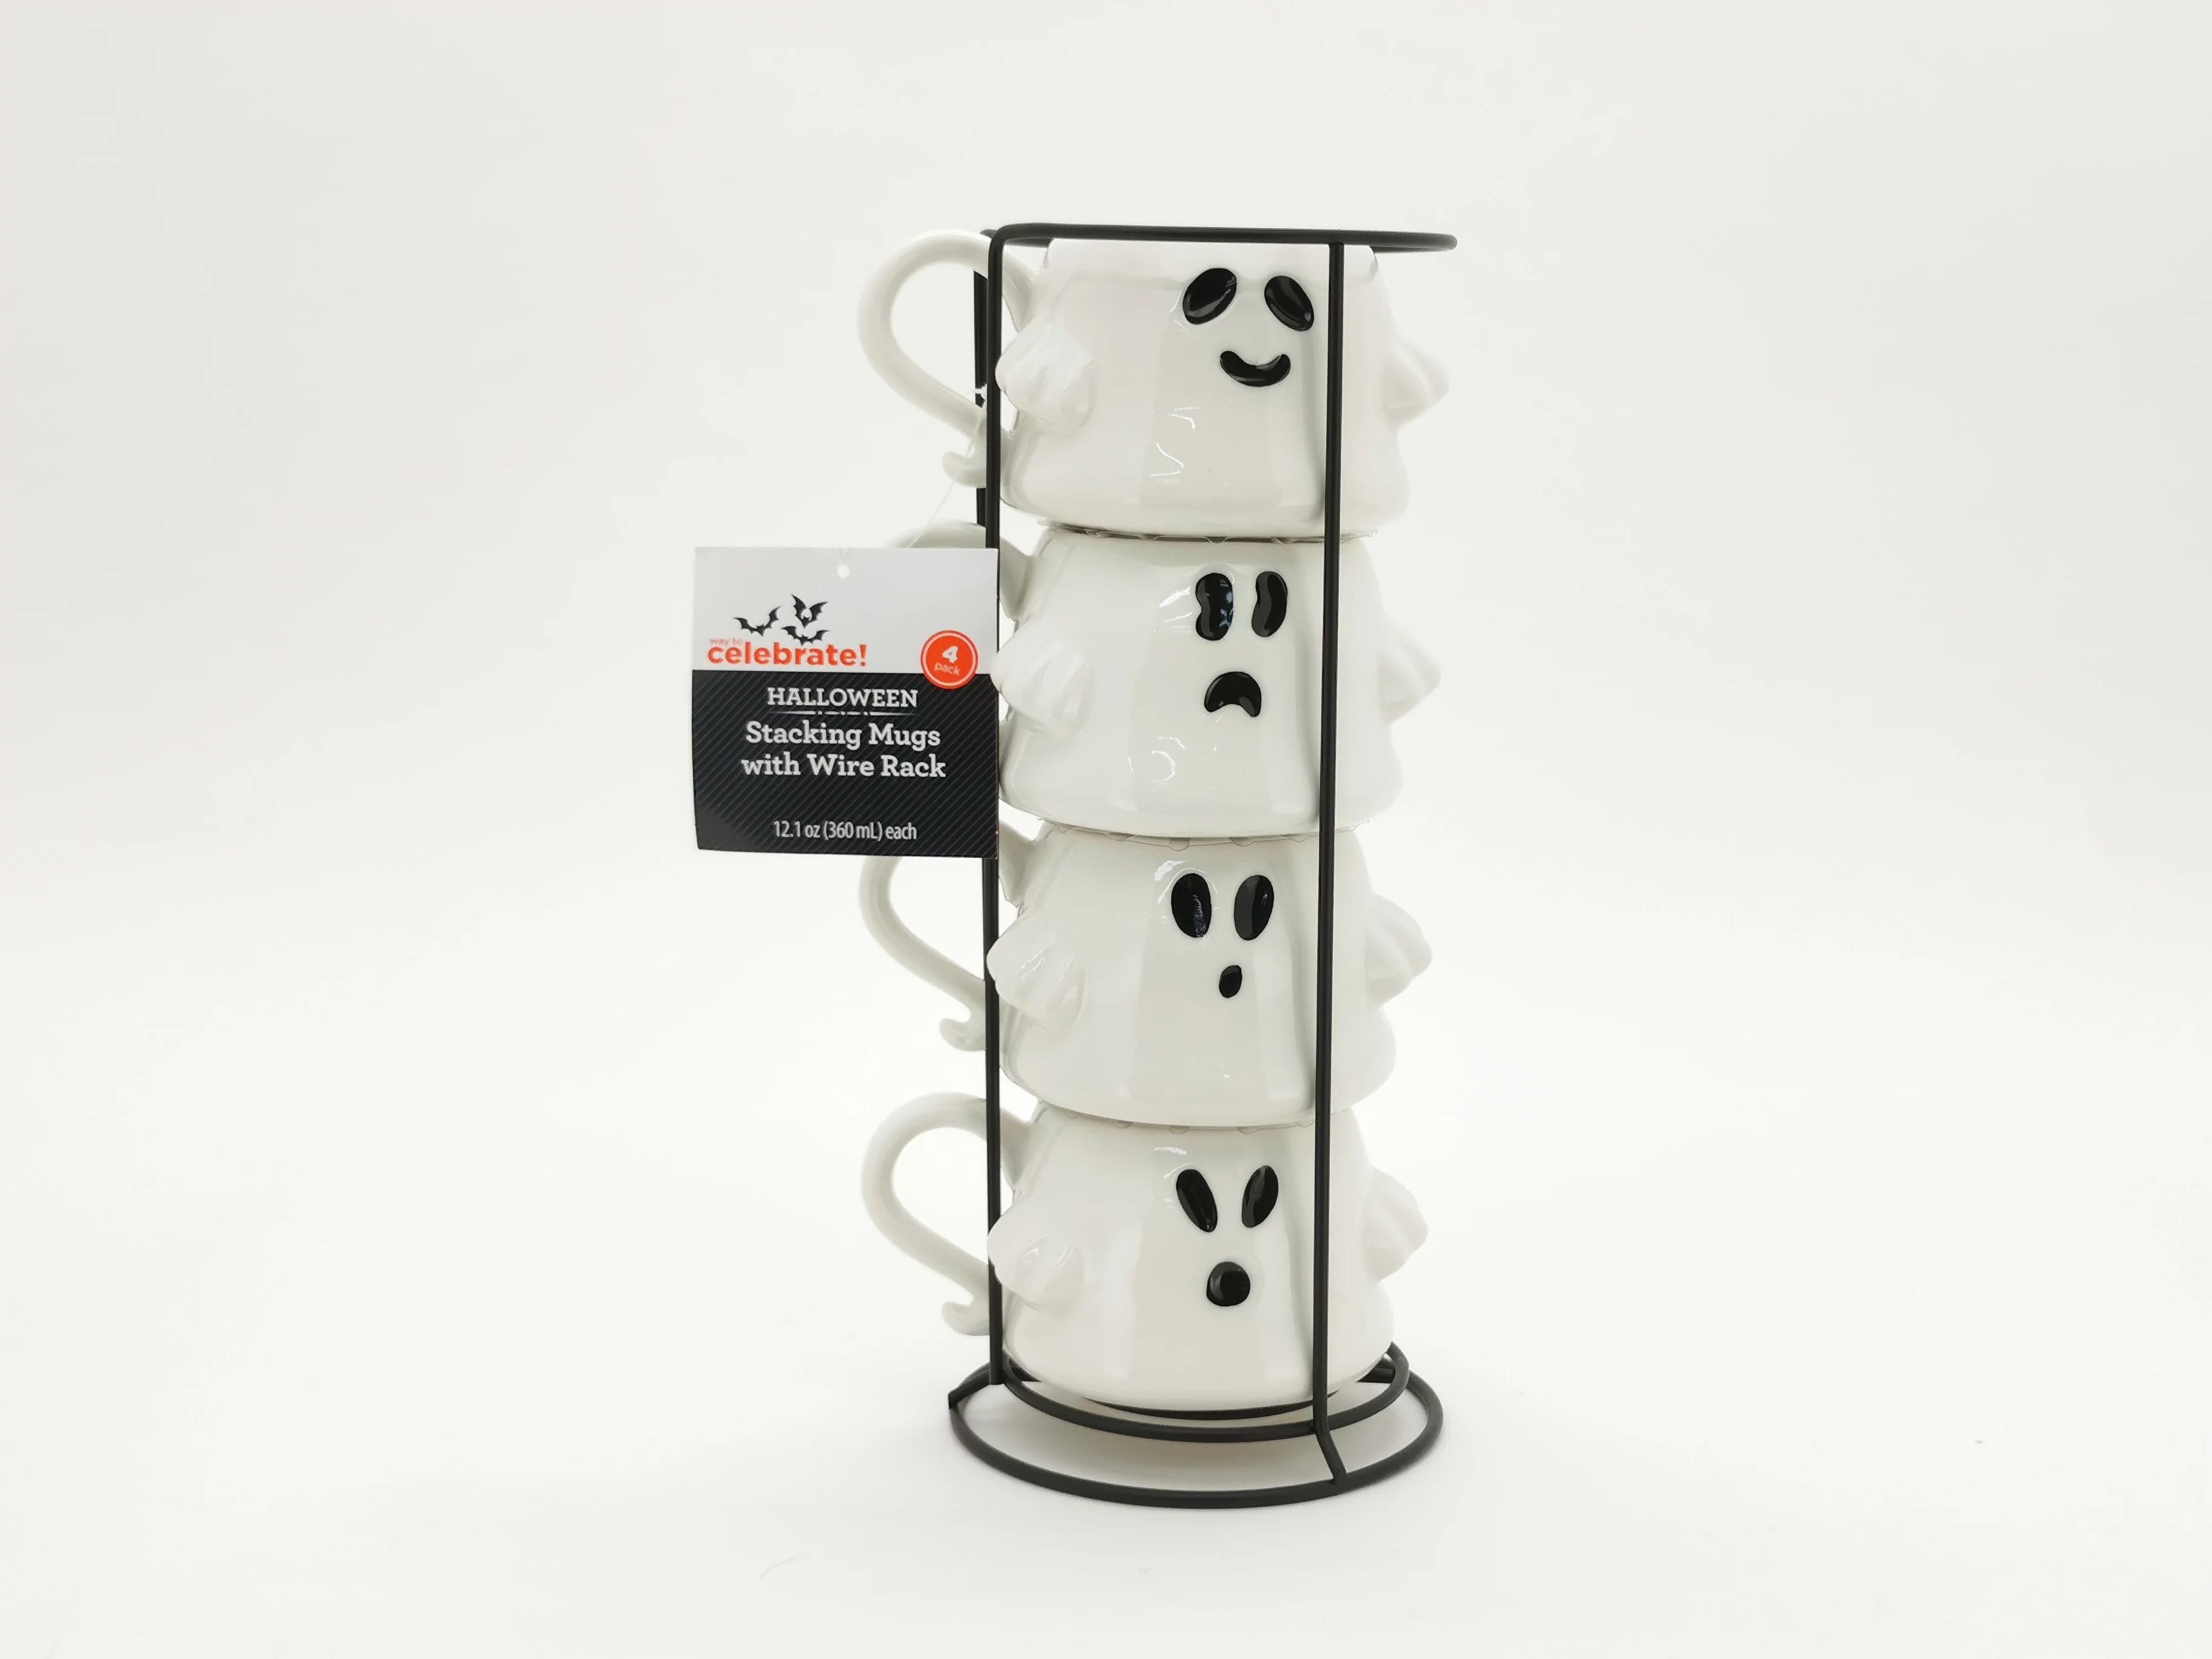 Way to Celebrate! Ghost Mug Stack, 12 fl oz Stoneware, Black and White | Walmart (US)